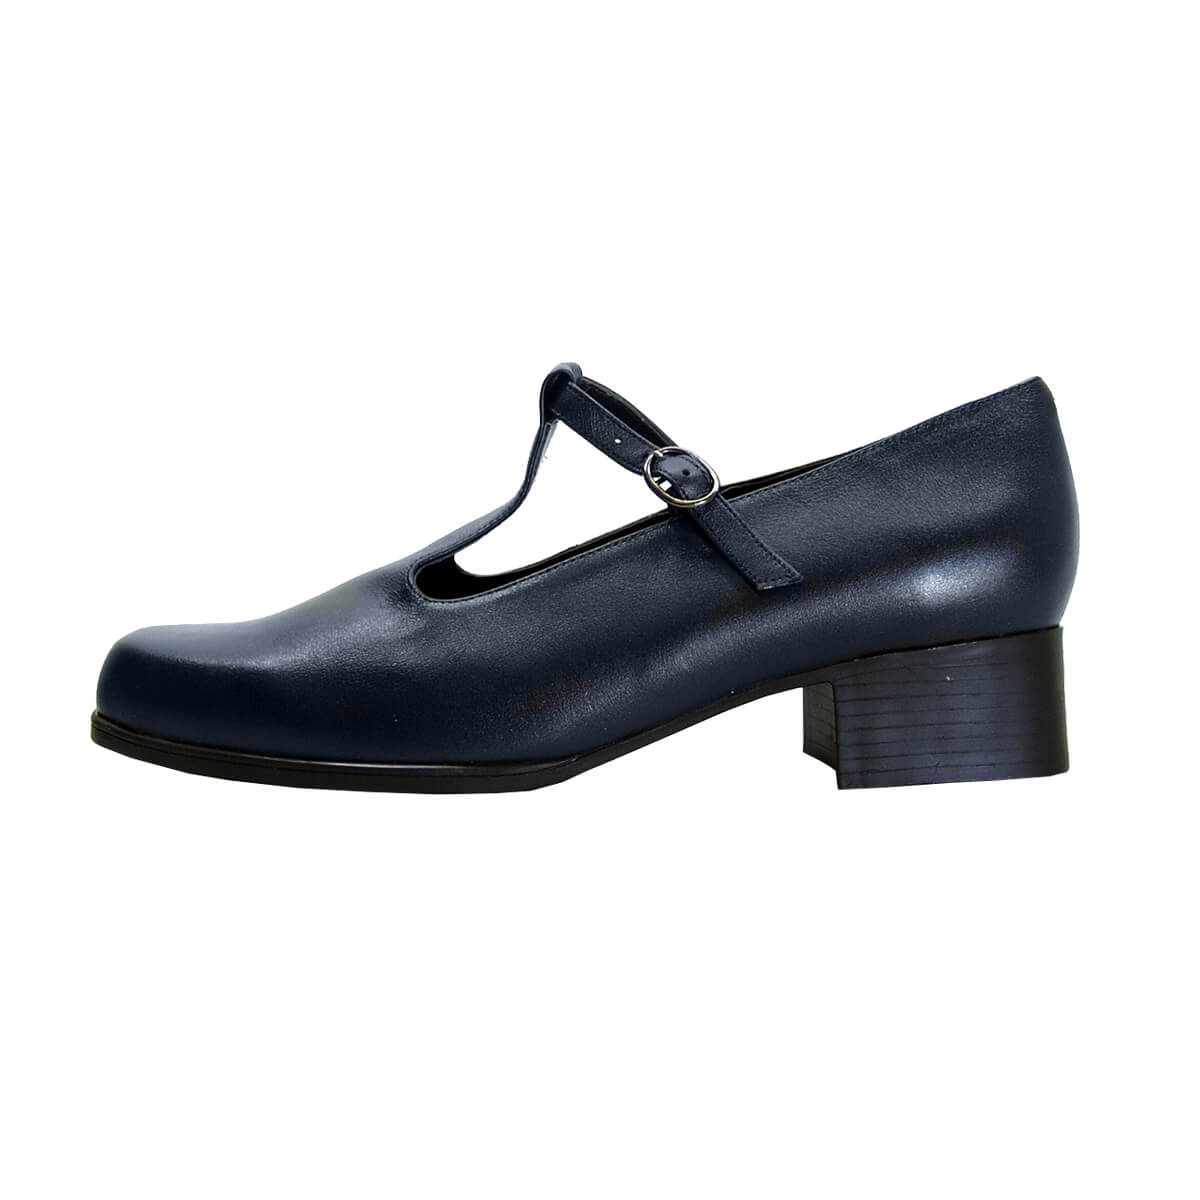 PEERAGE Asma Women's Wide Width T-Strap Leather Shoes